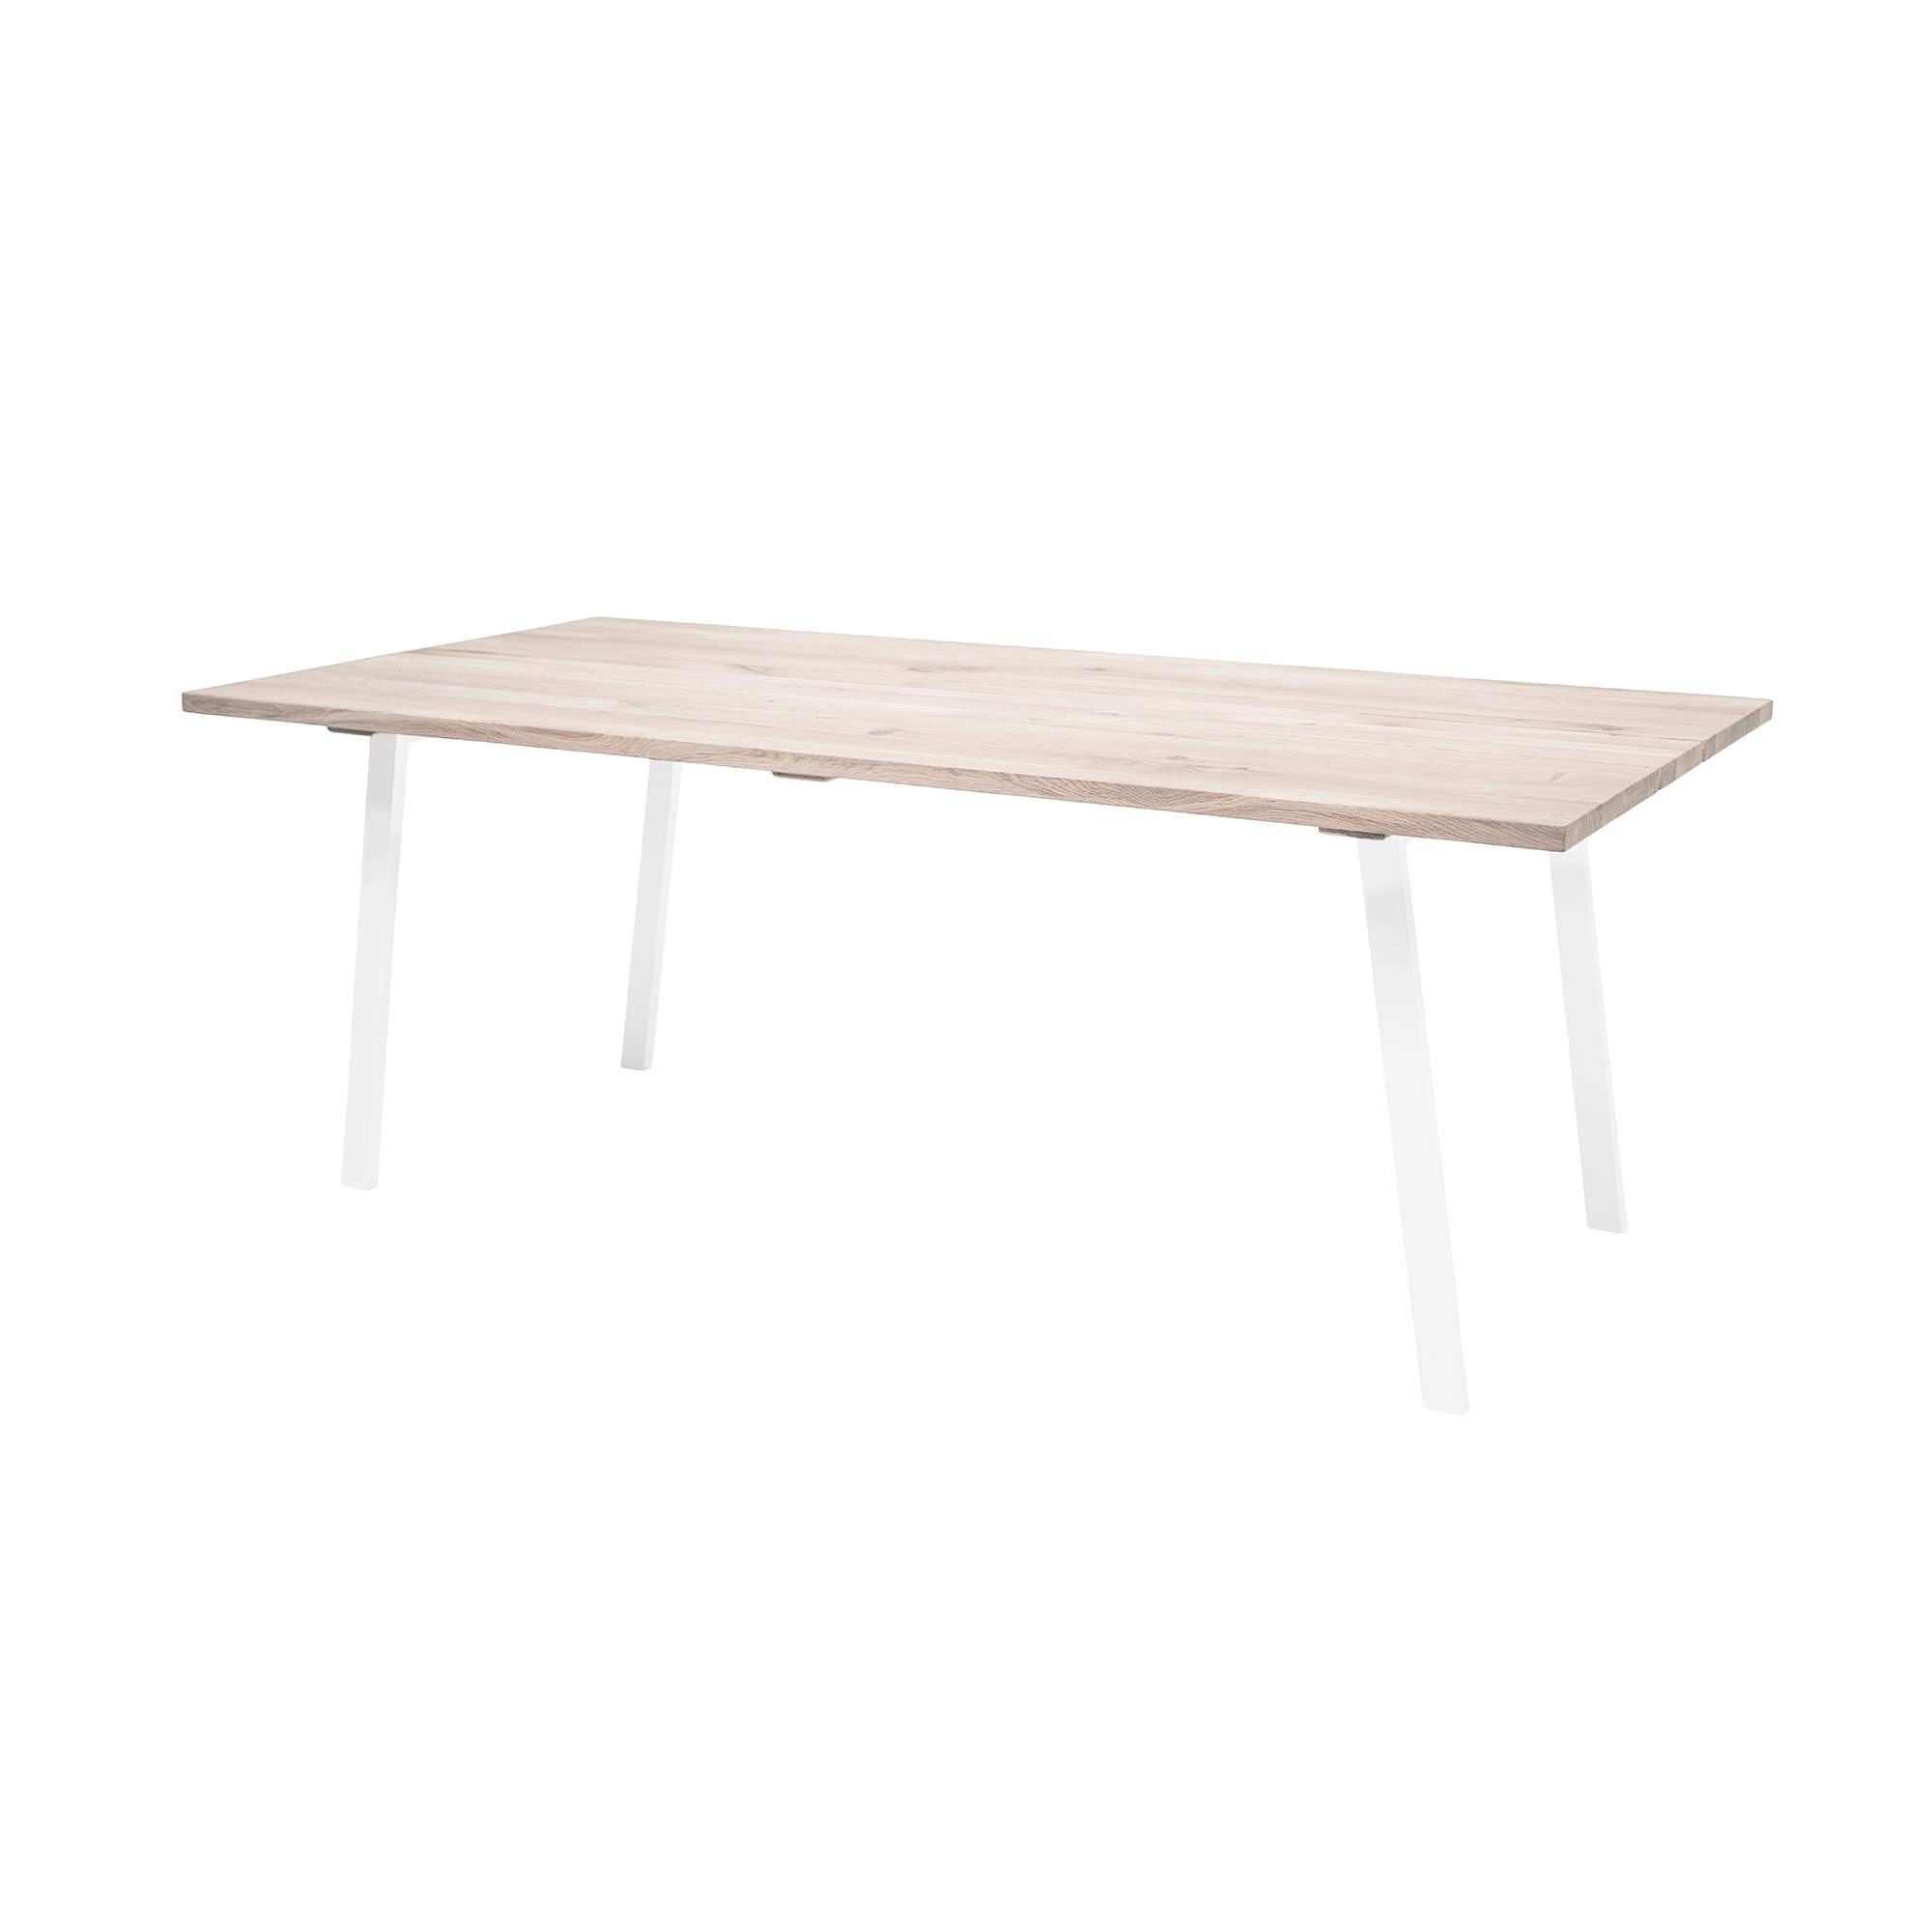 BLOOMINGVILLE - Cozy spisebord - natur egetræ/hvid jern, rektangulær (200x95)